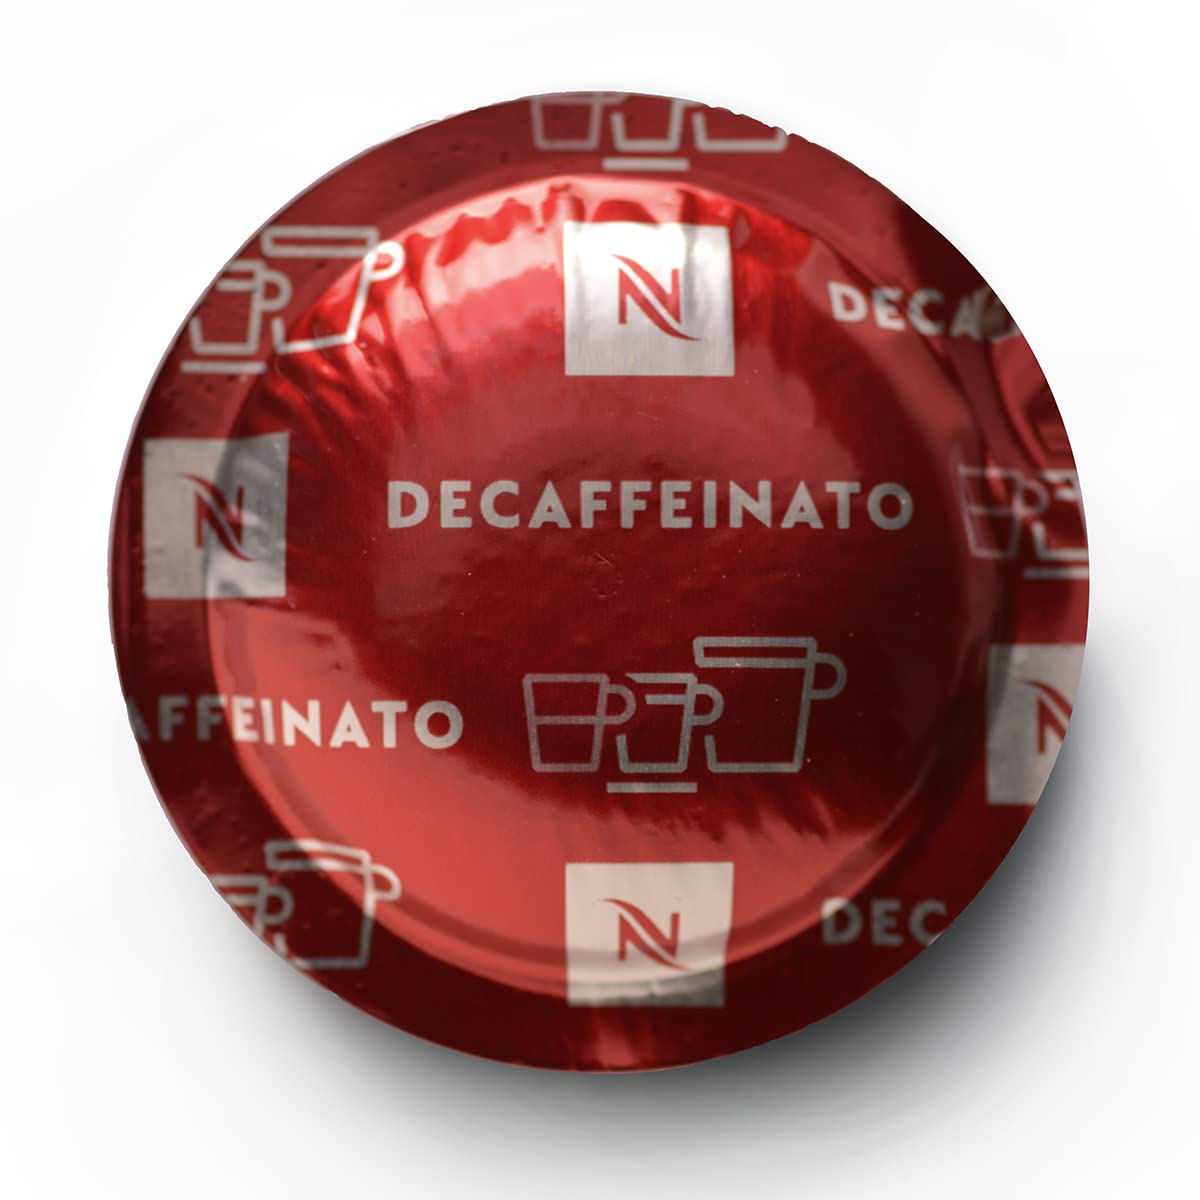 Nespresso Pro Capsule Pads - 50x Decaffeinato - Original - for Nespresso Pro systems